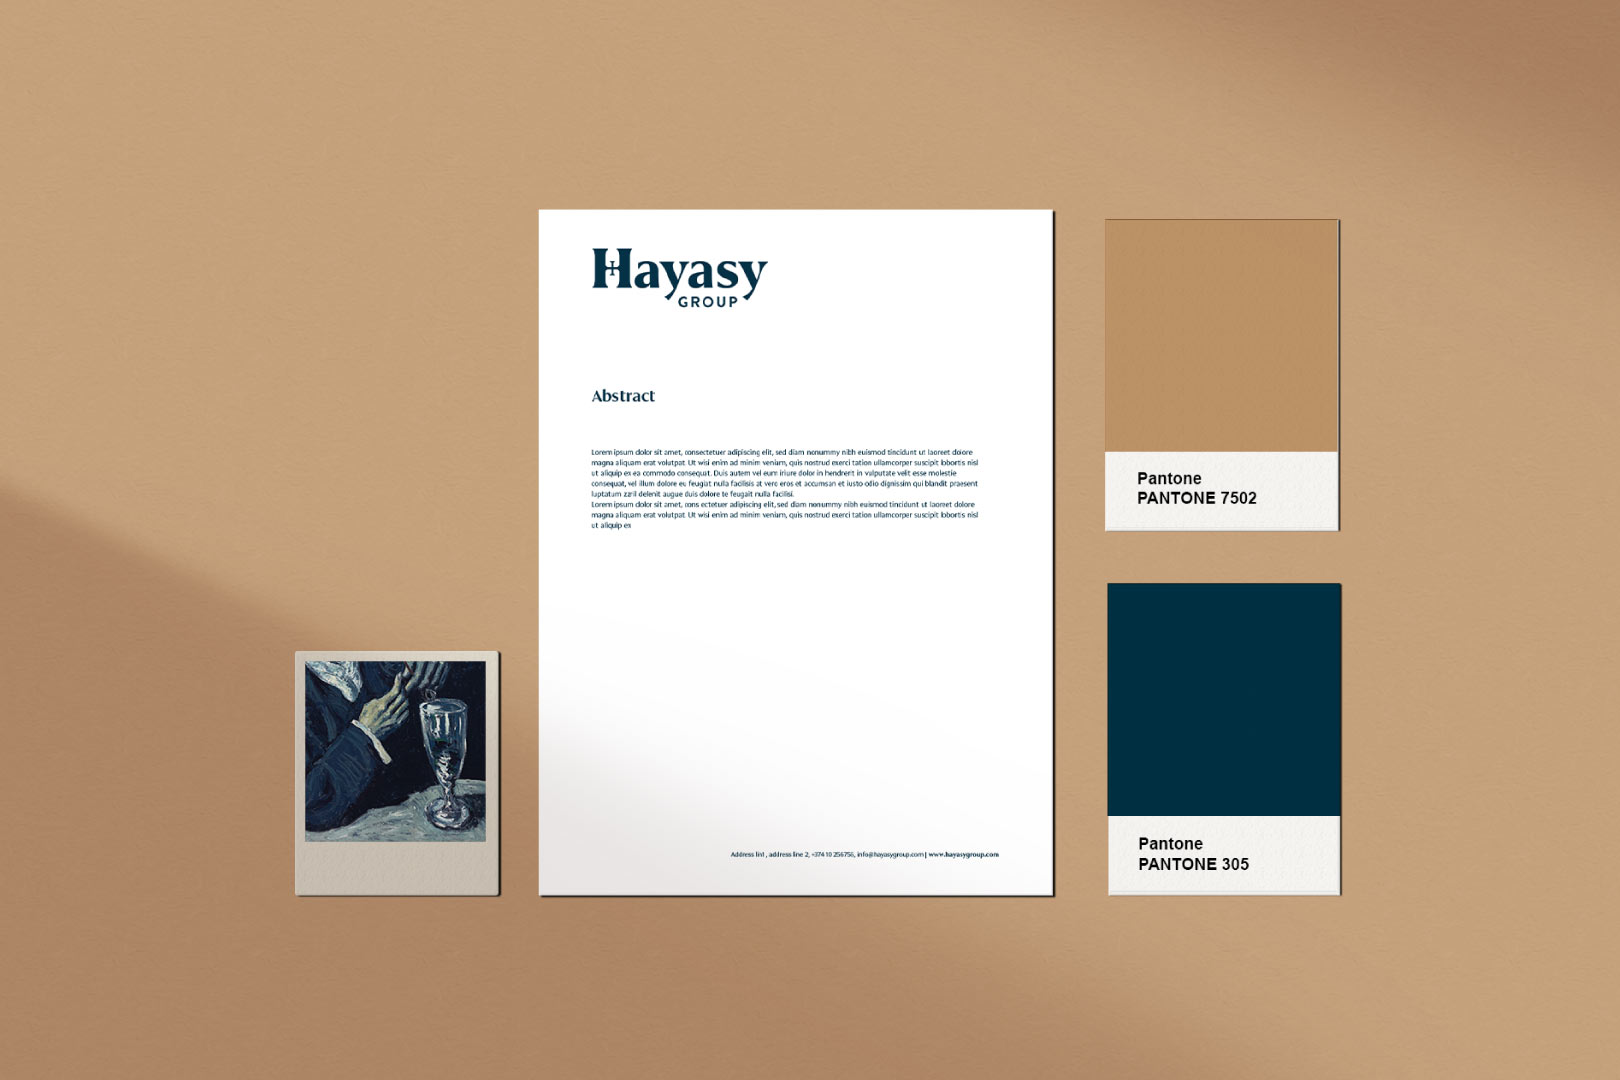 Hayasy group branding, logo design and website done by indigo branding in Yerevan